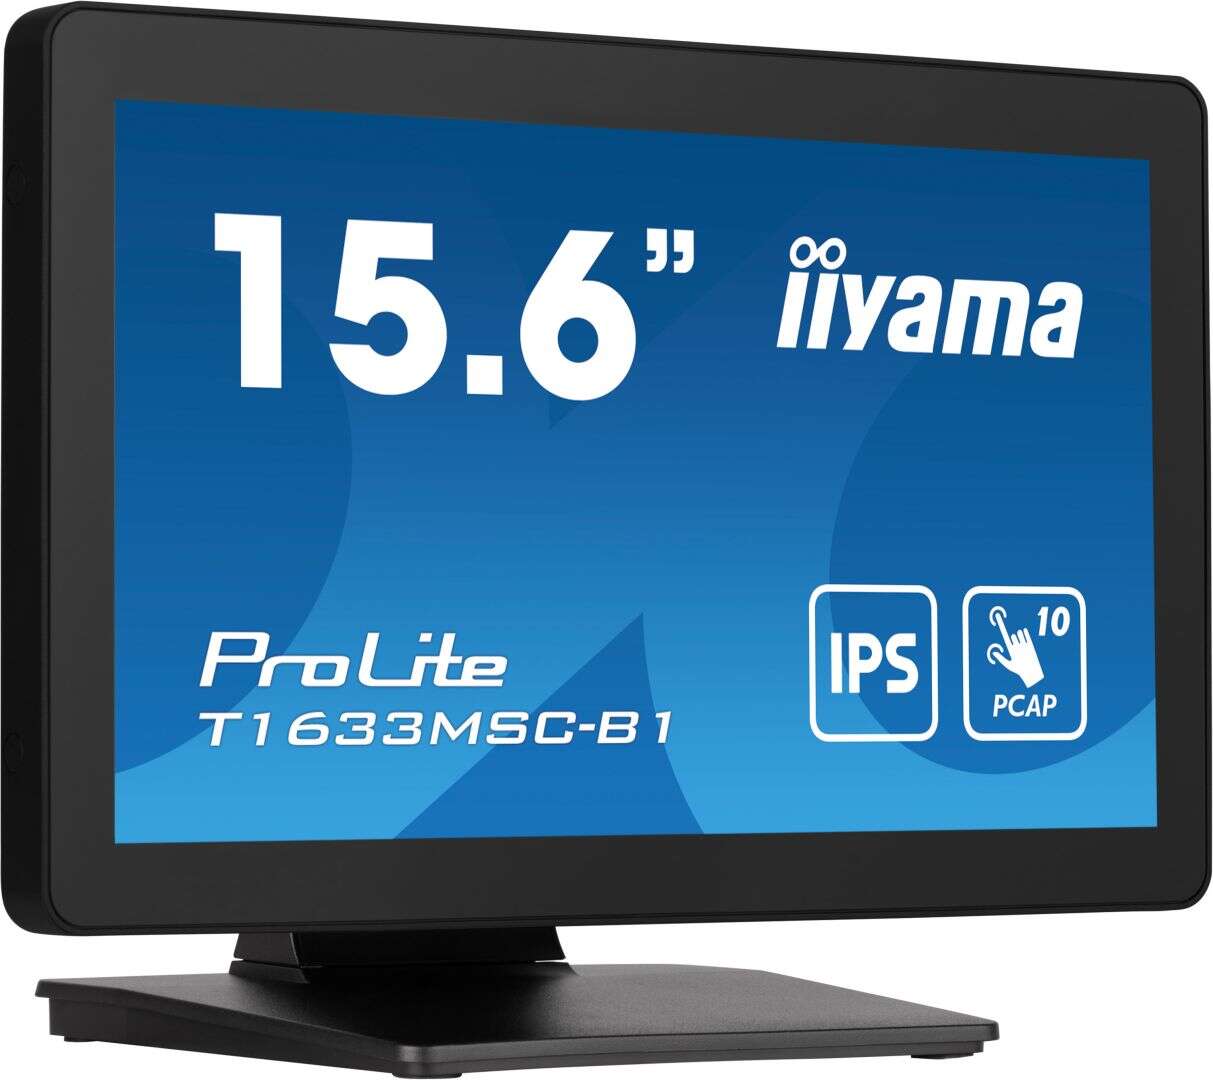 Iiyama 15,6" t1633msc-b1 ips led t1633msc-b1